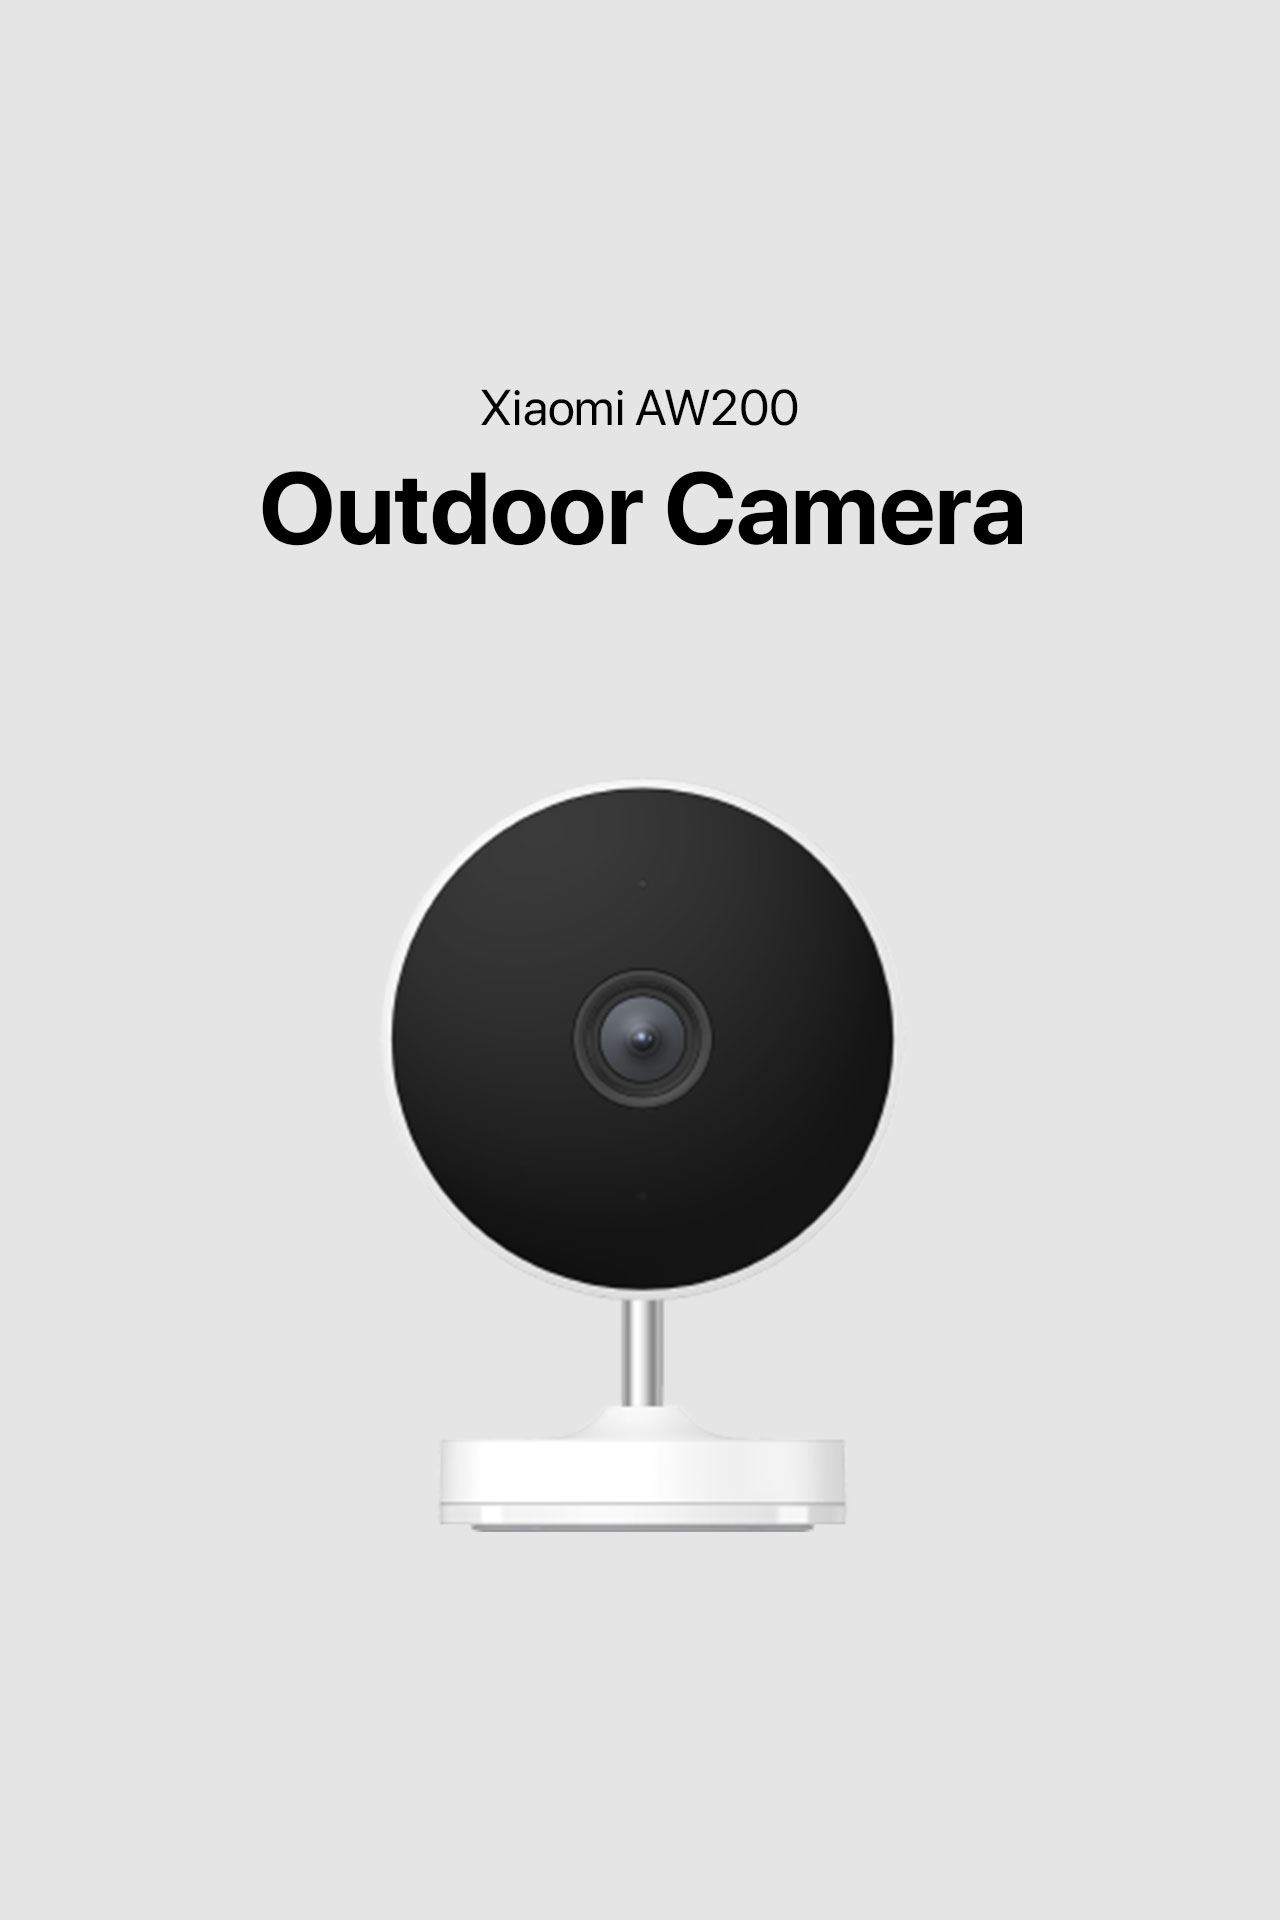 Xiaomi Outdoor Camera AW200 White